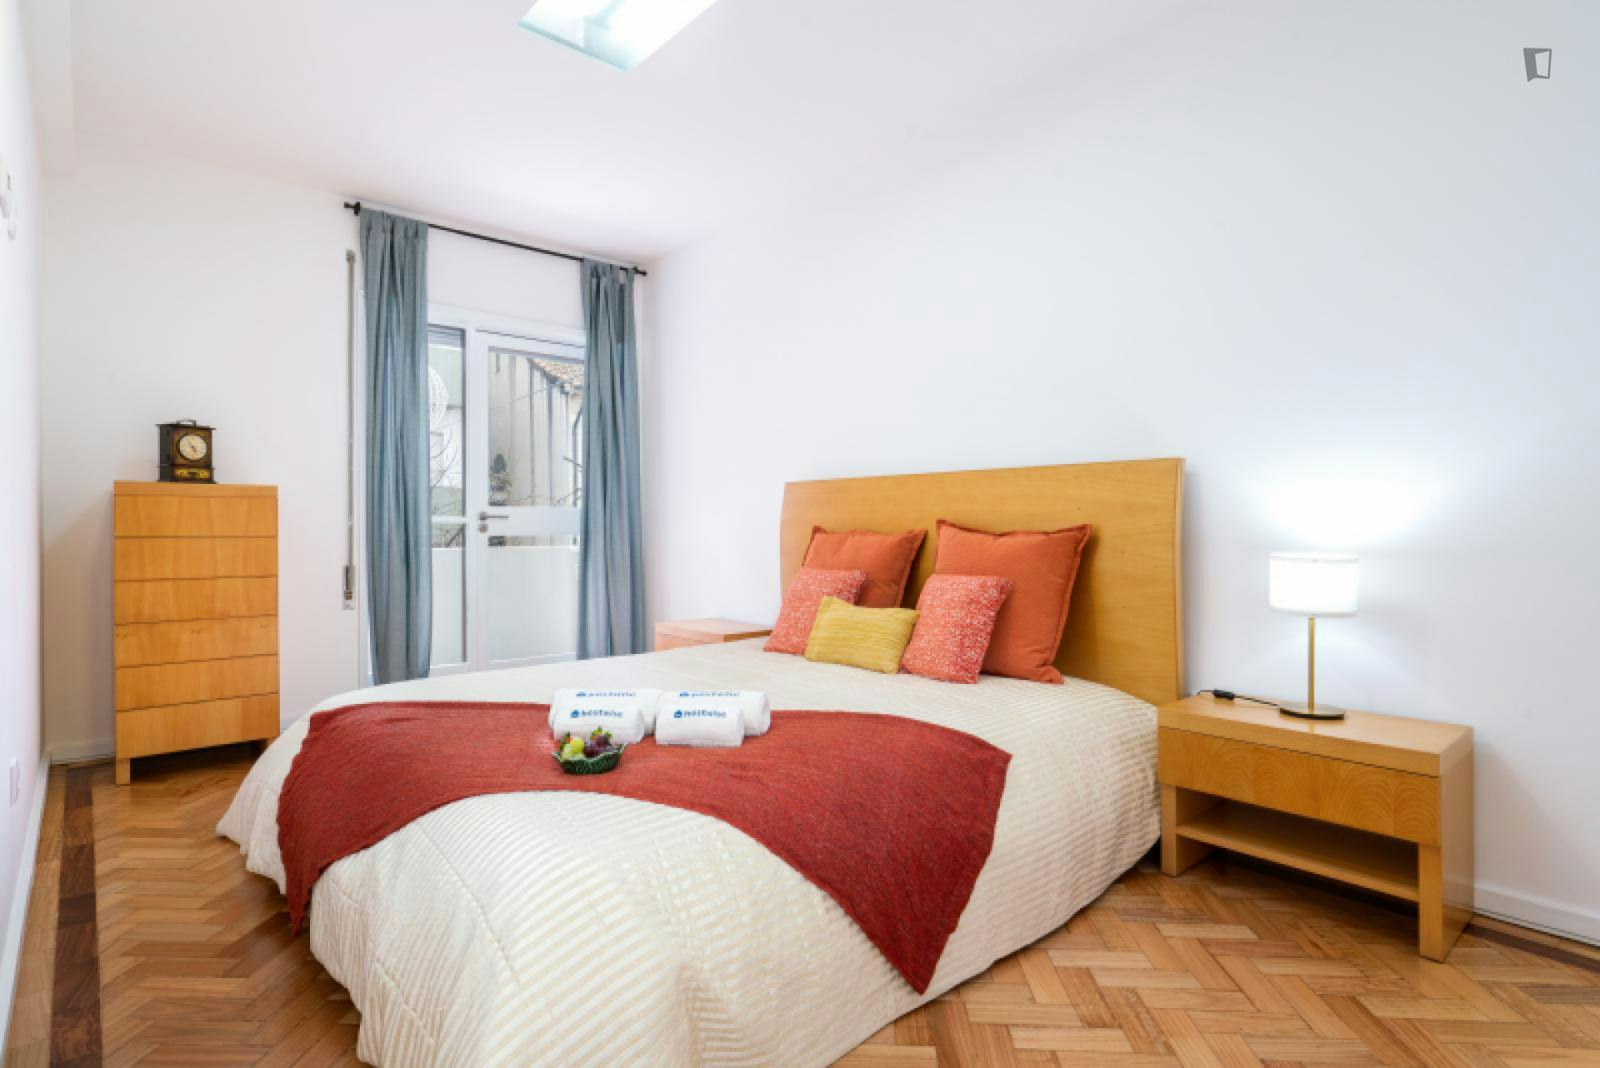 Spacious 3-bedroom flat in Espinho